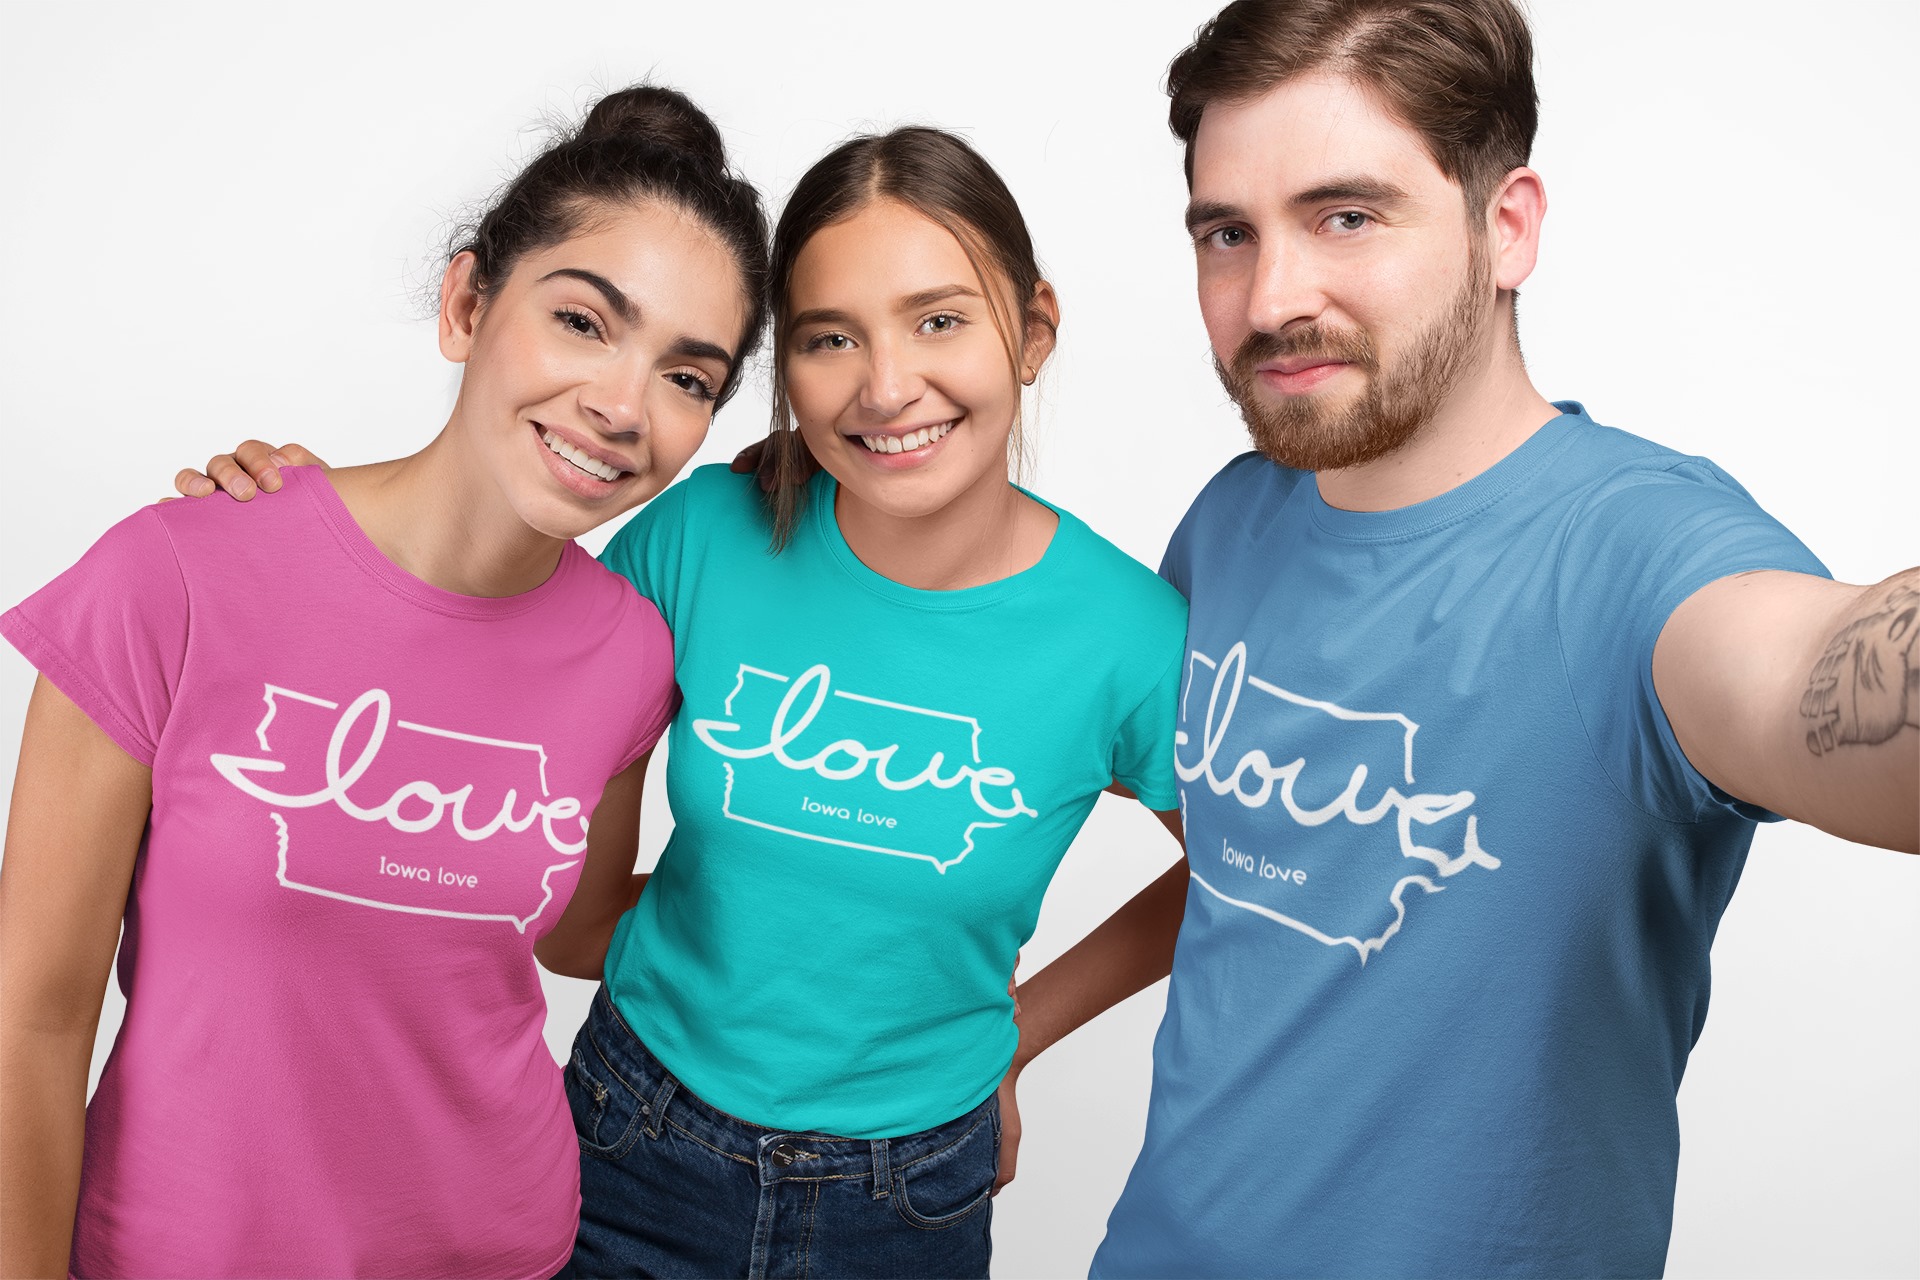 Iowa Love t-shirts